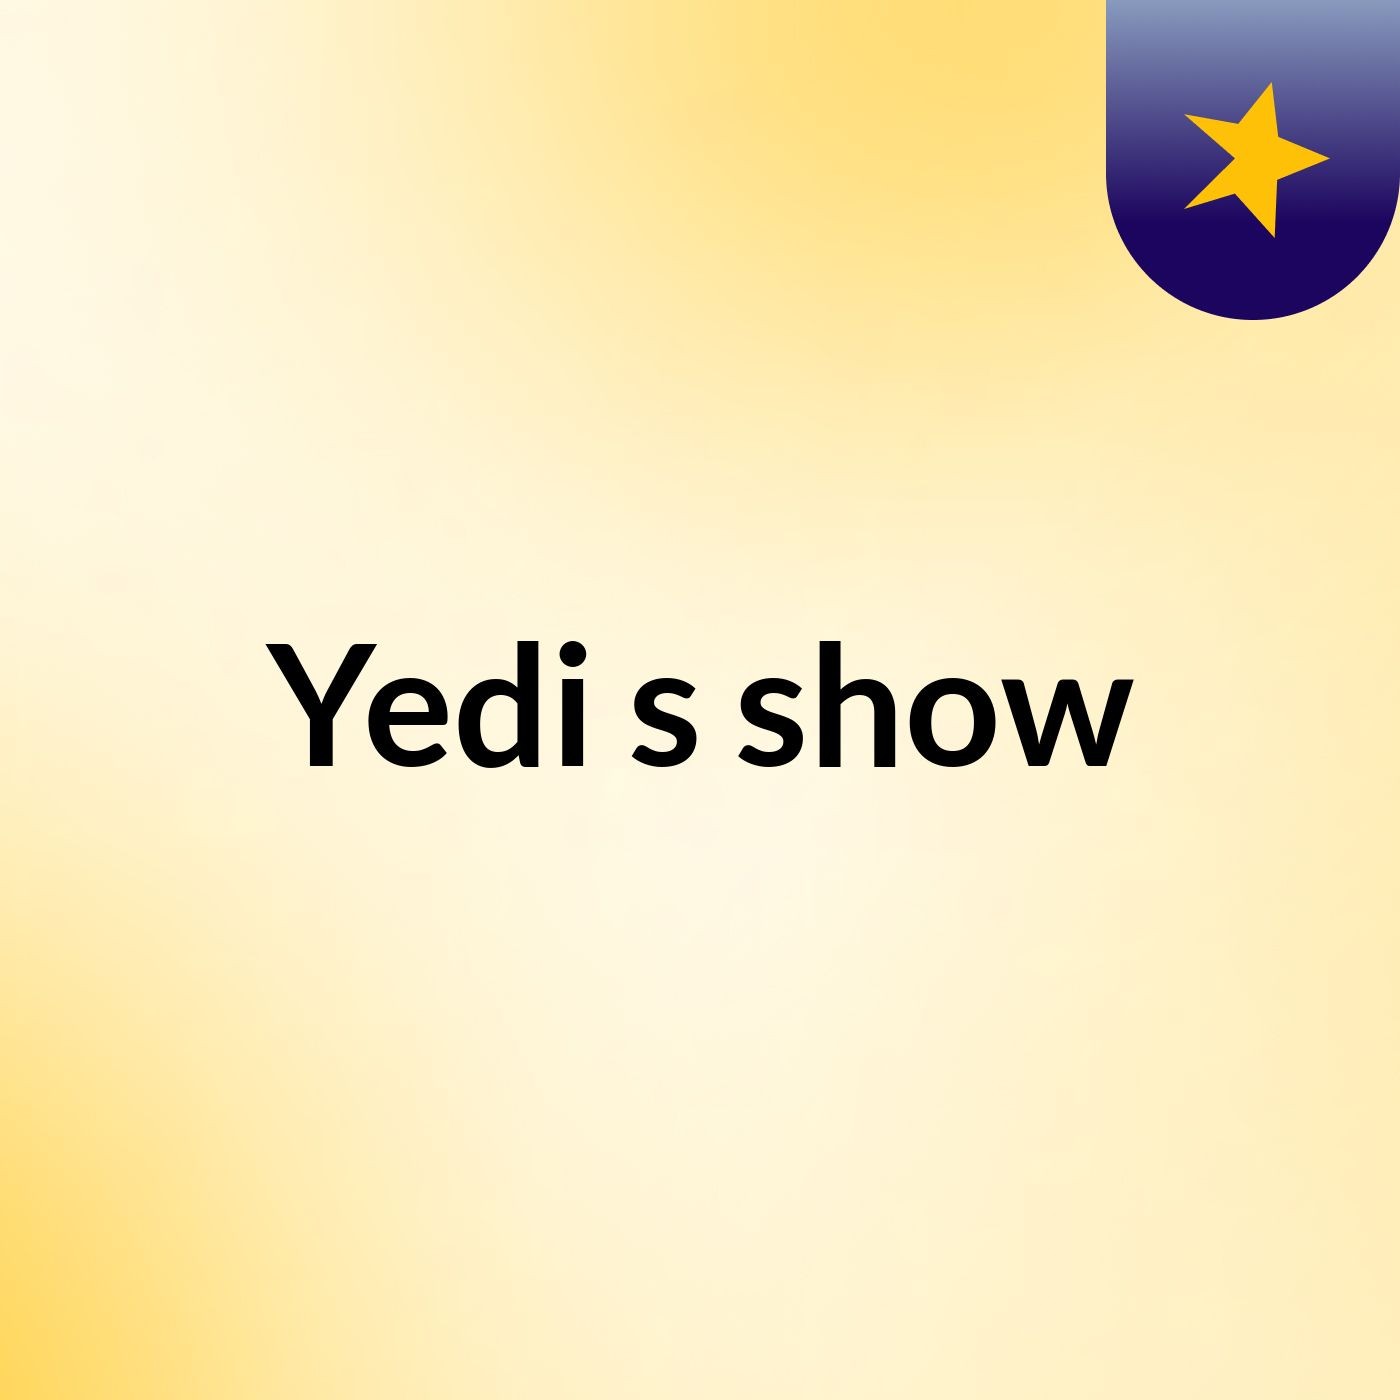 Yedi's show